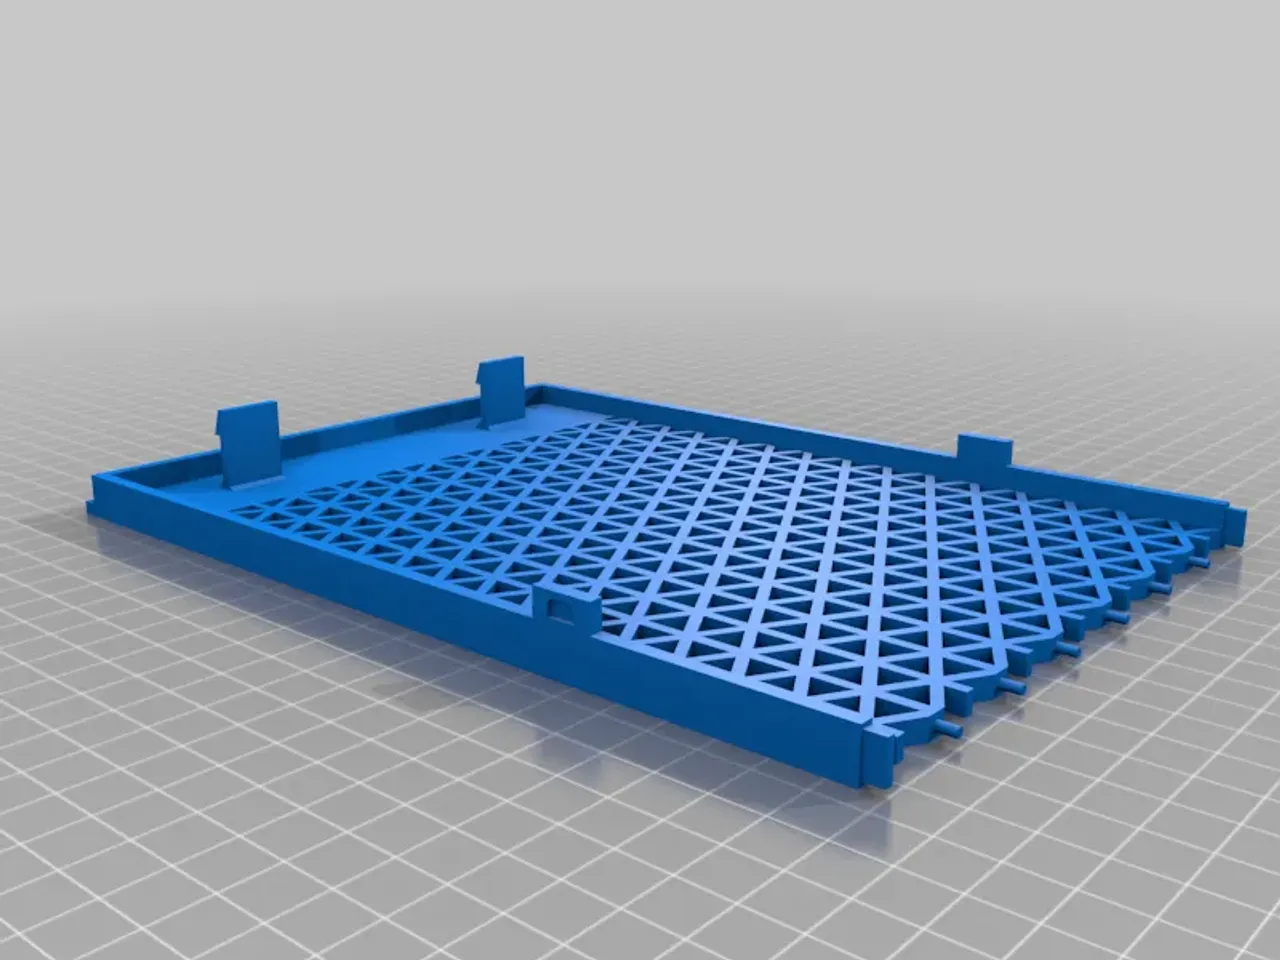 3D printed Cooler Master Masterbox 5 mesh front panel airflow MOD :  r/pcmods